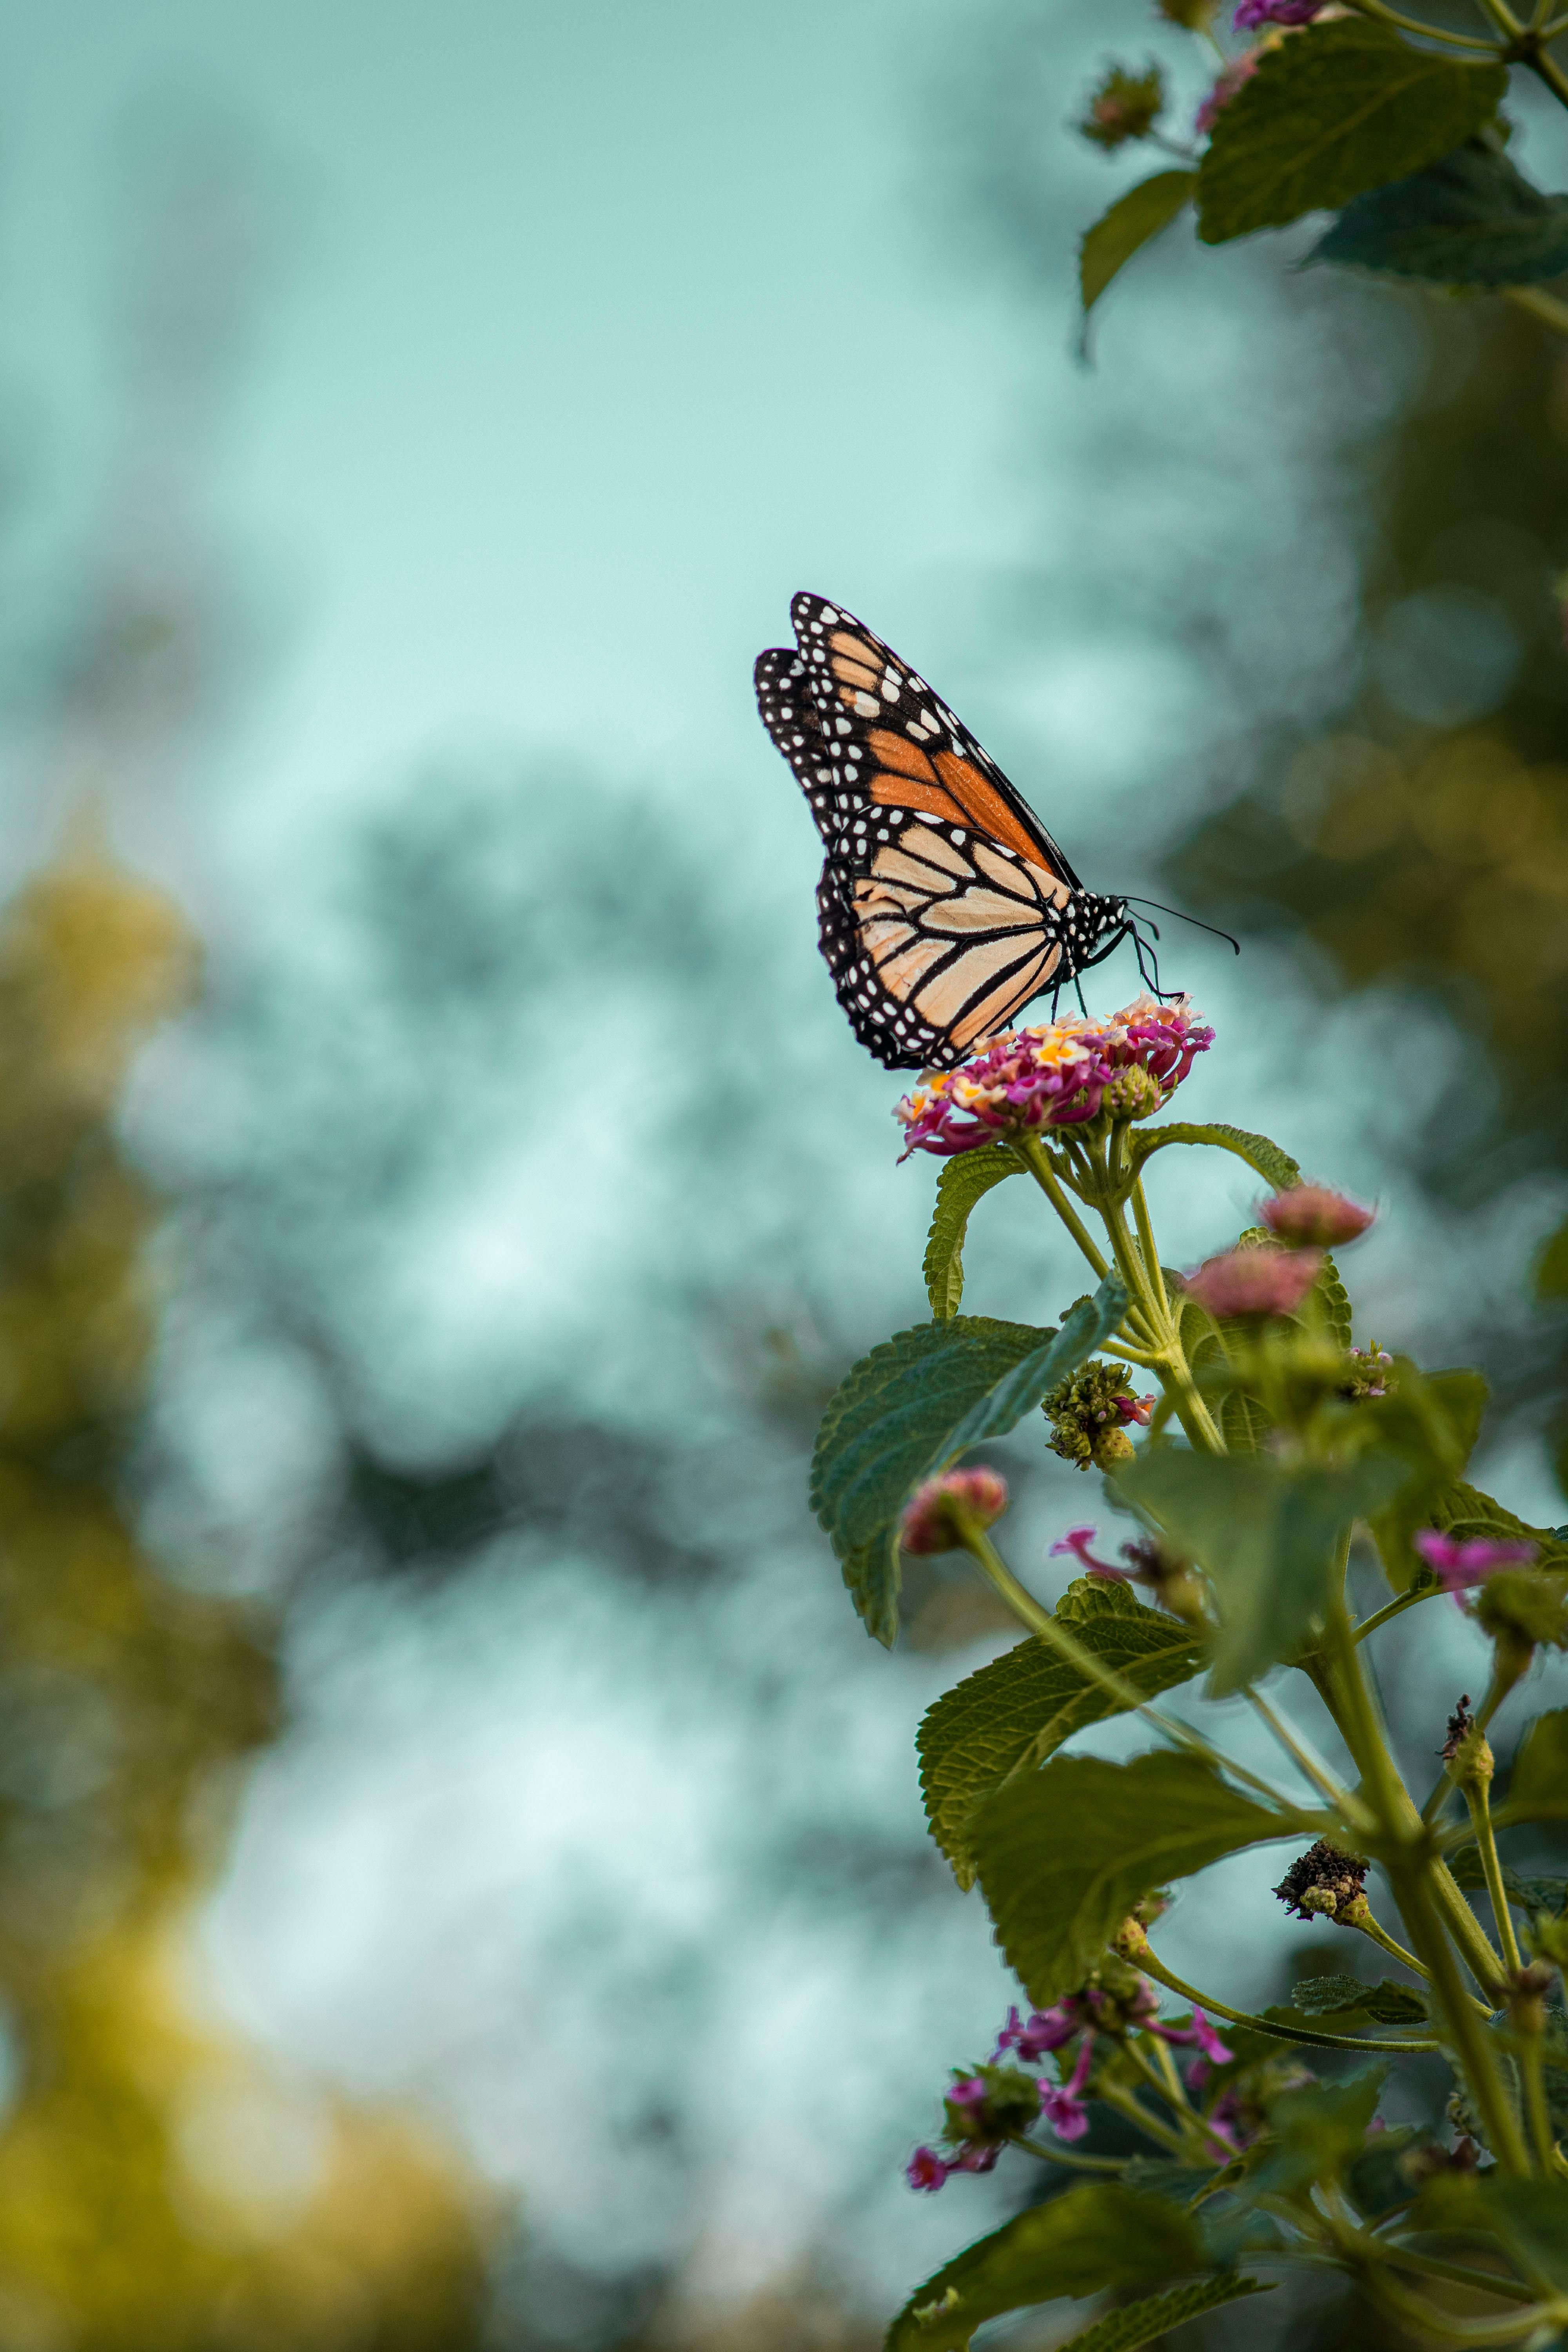 A monarch butterfly on a flower.